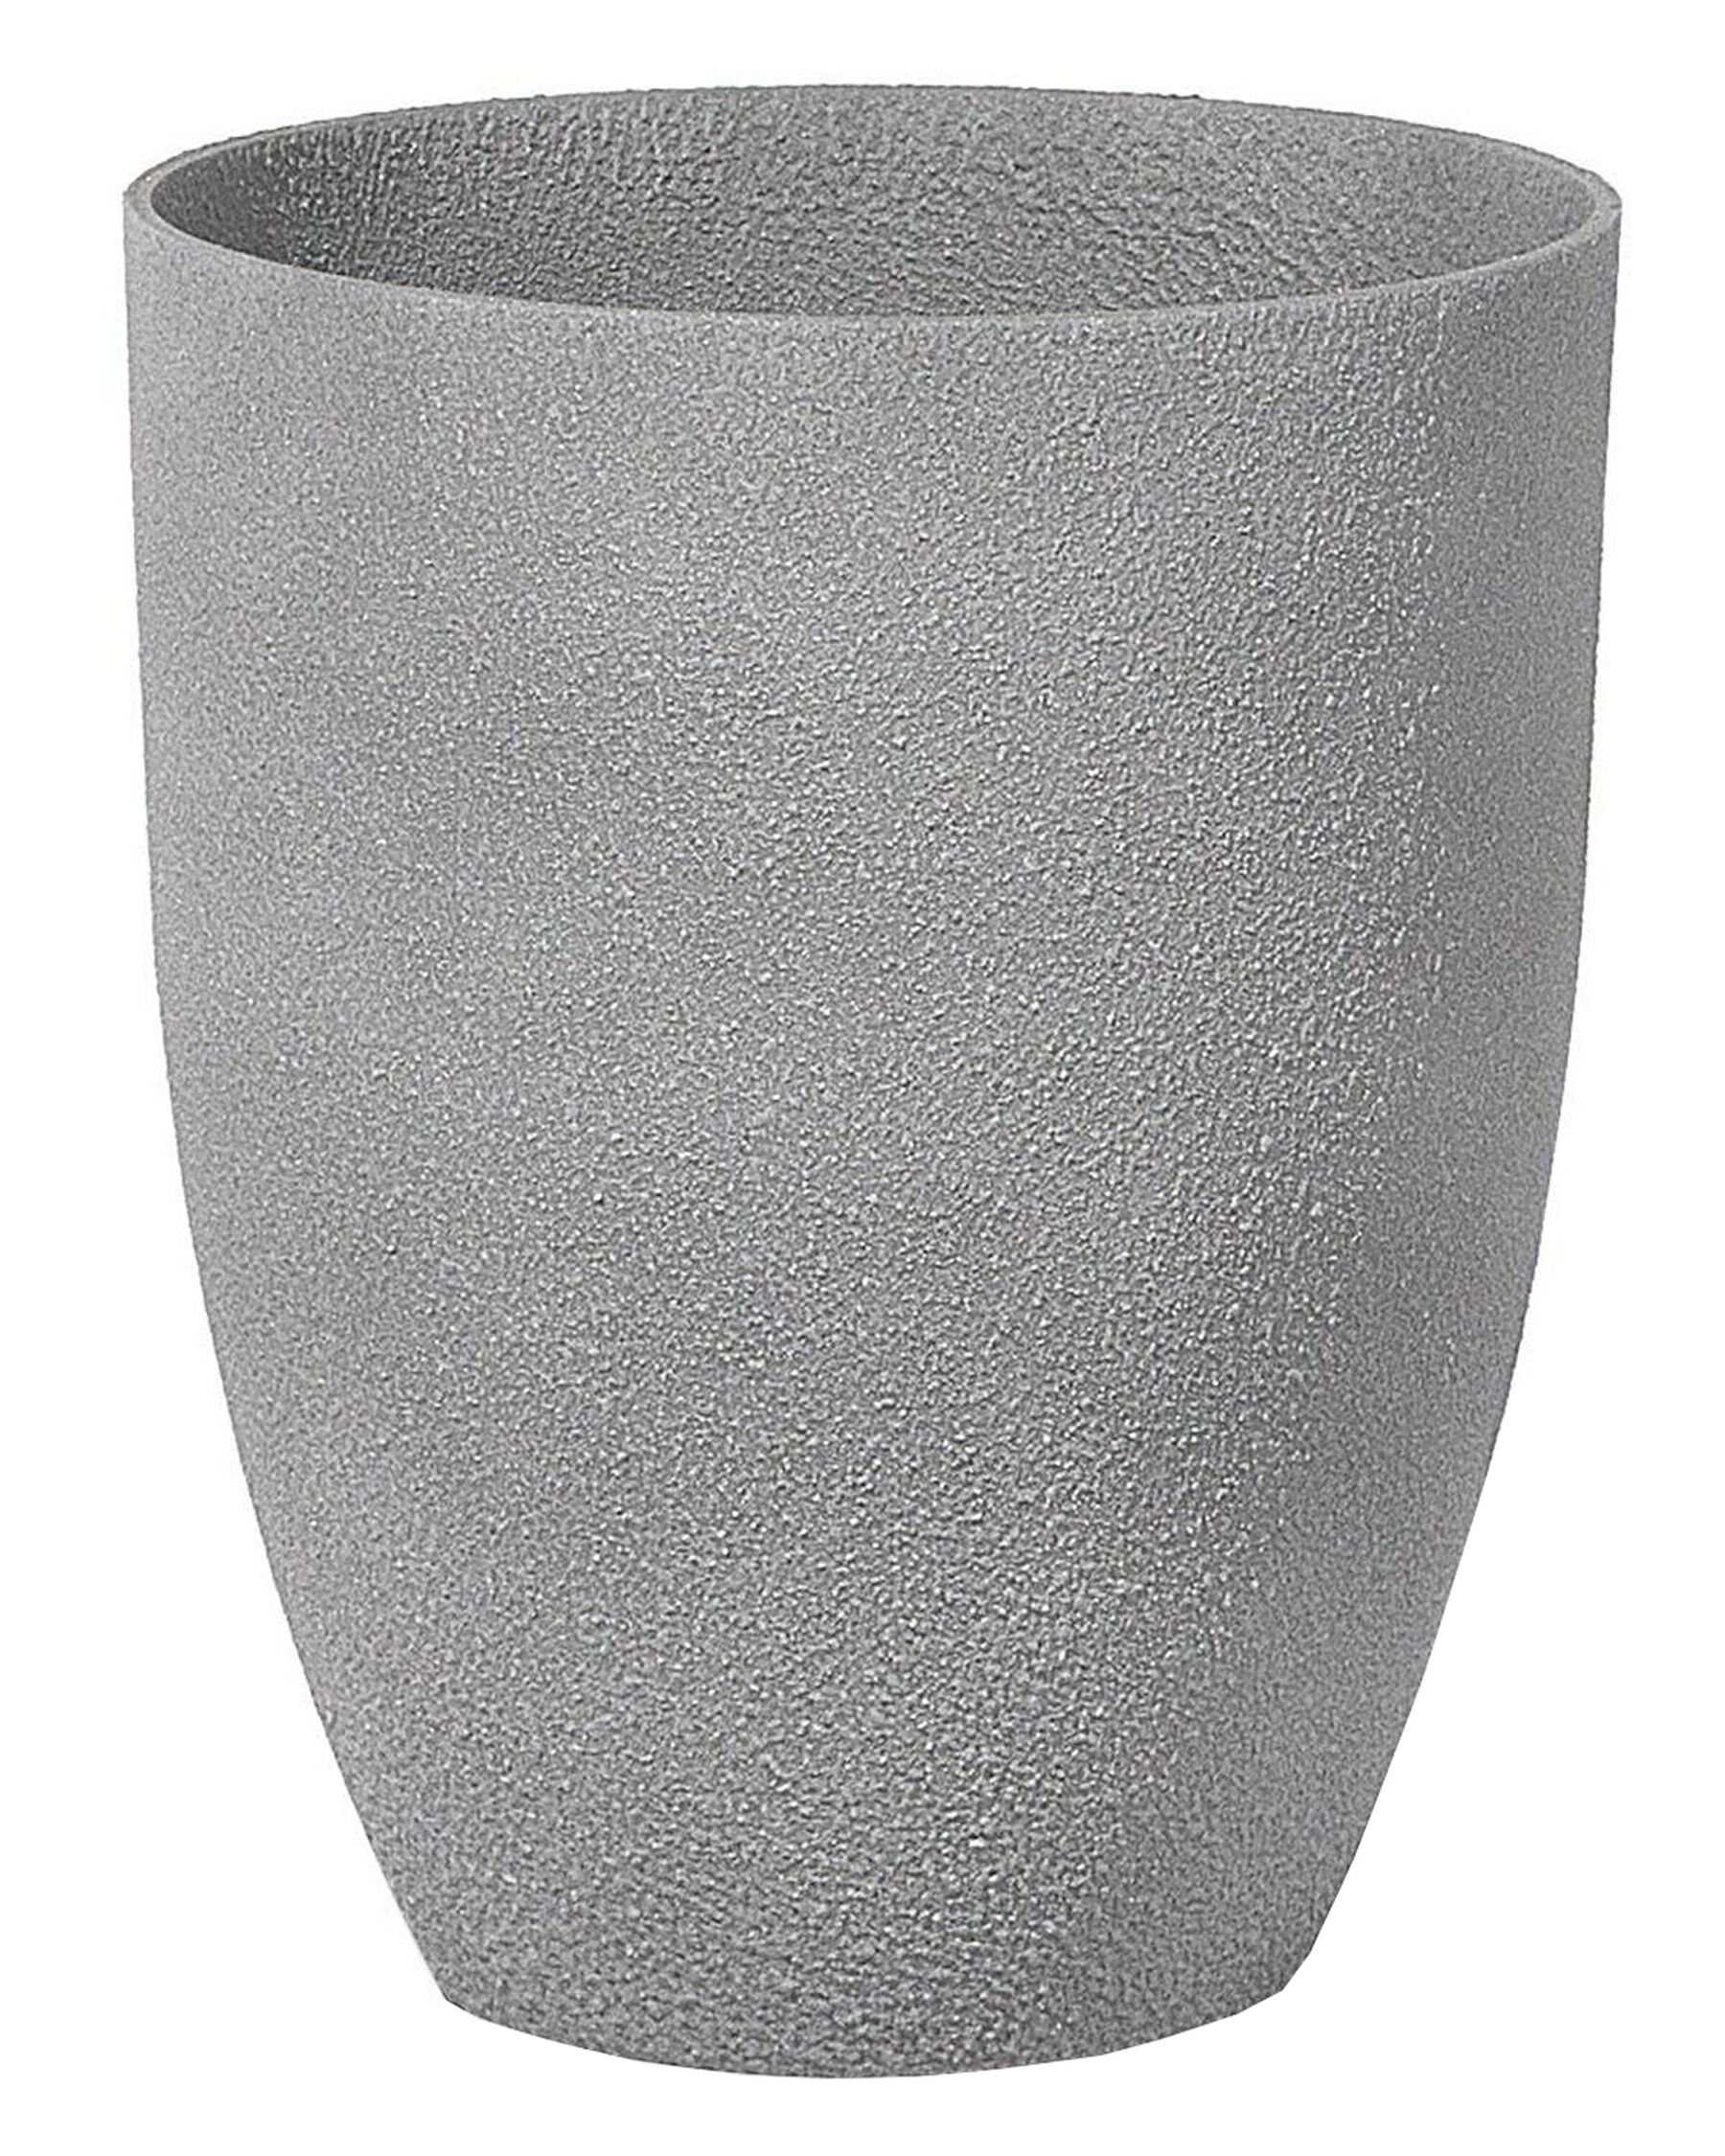 Vaso tondo per interno ed esterno grigio 35x35x42cm CROTON_692182